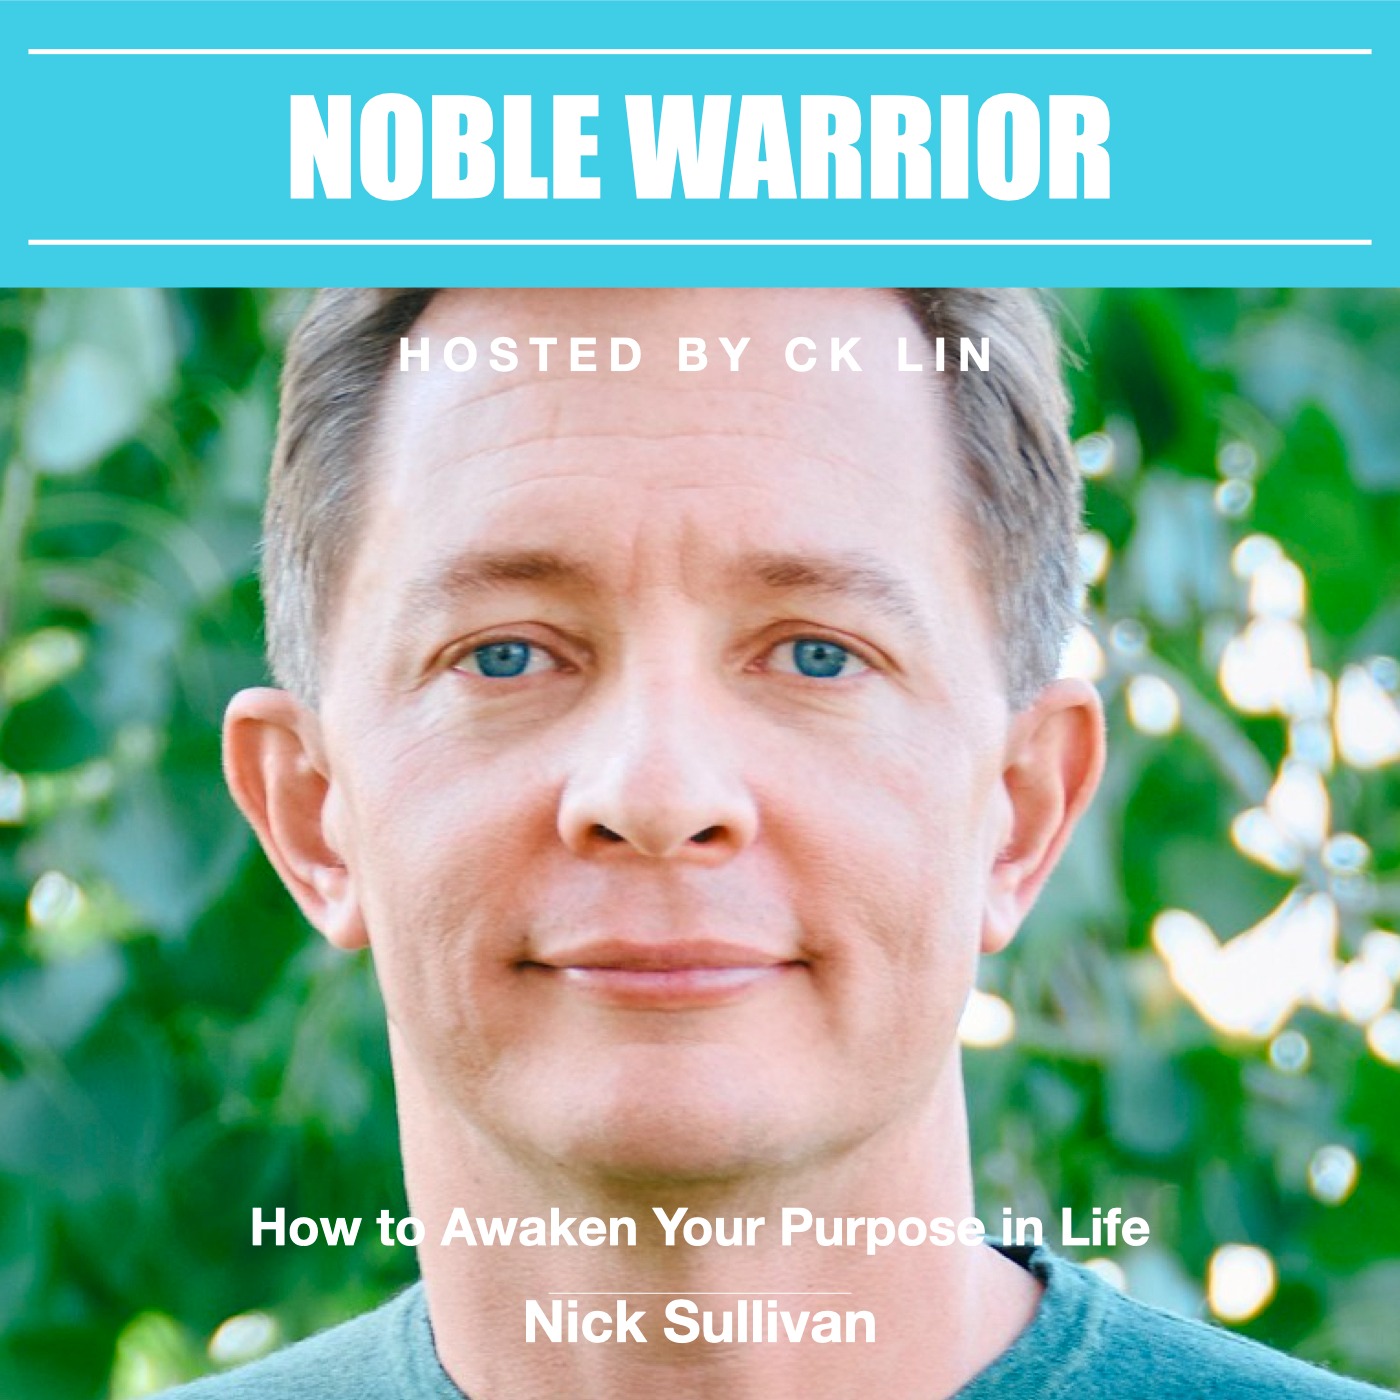 007 Nick Sullivan: How to Awaken Your Purpose in Life Image